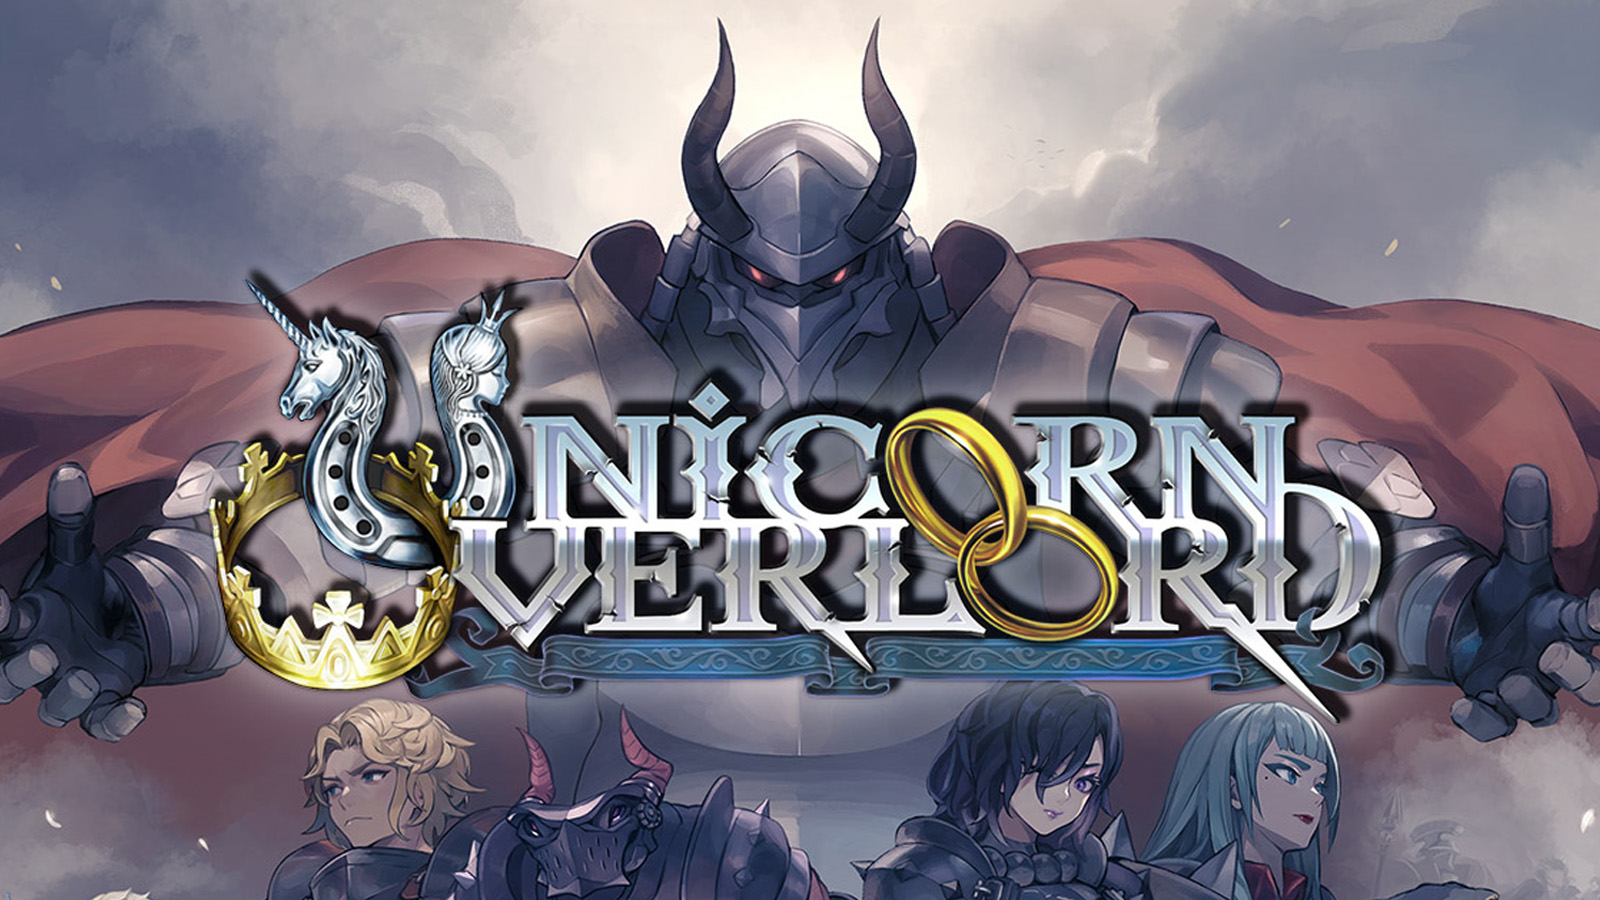 Unicorn Overlord characters: Classes, companions, seiyuu